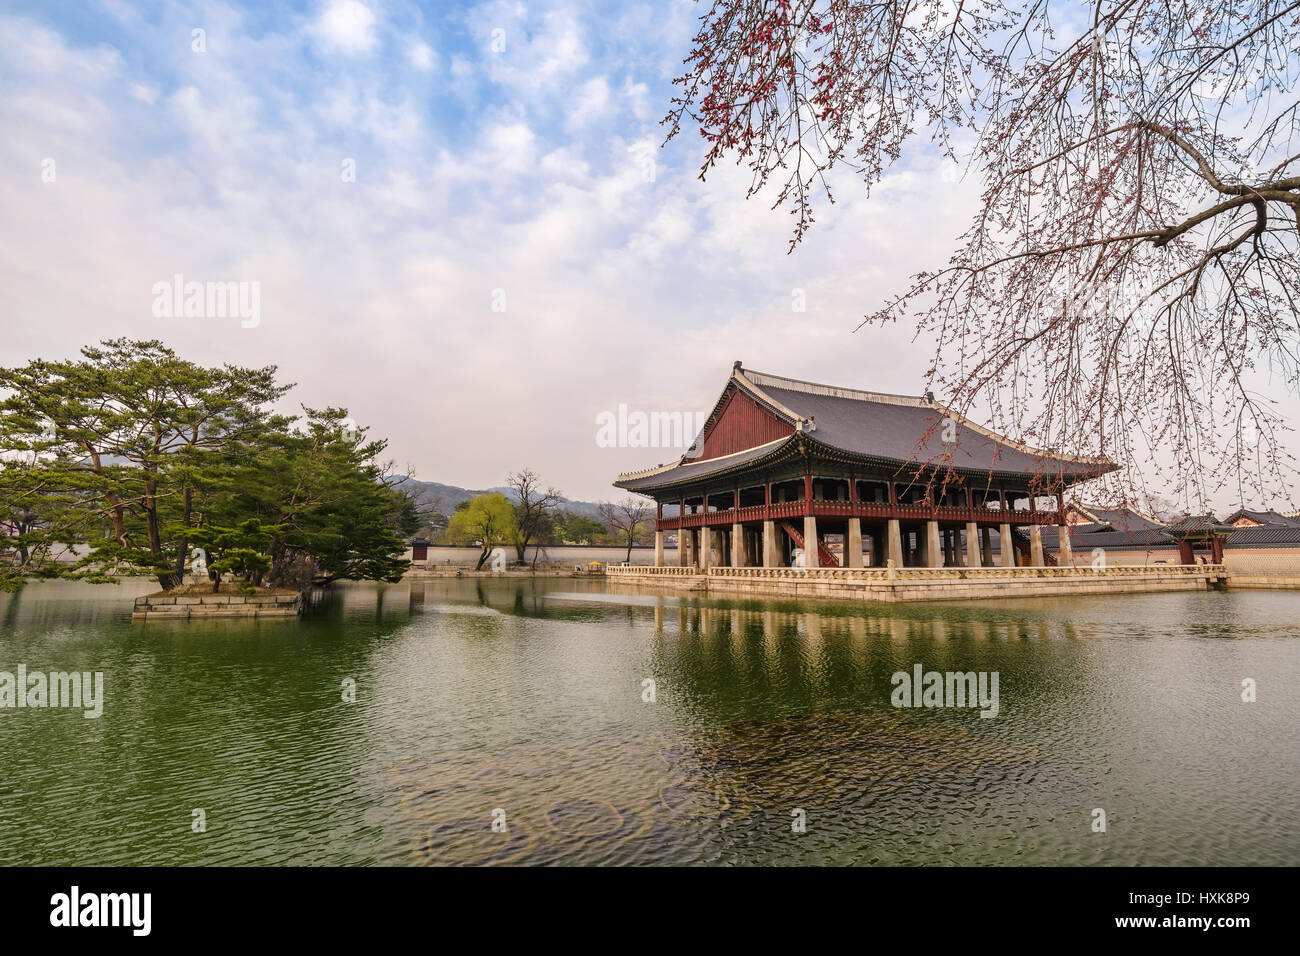 Spring cherry blossom or sakura flower at Gyeongbokgung Palace, Seoul, South Korea Stock Photo